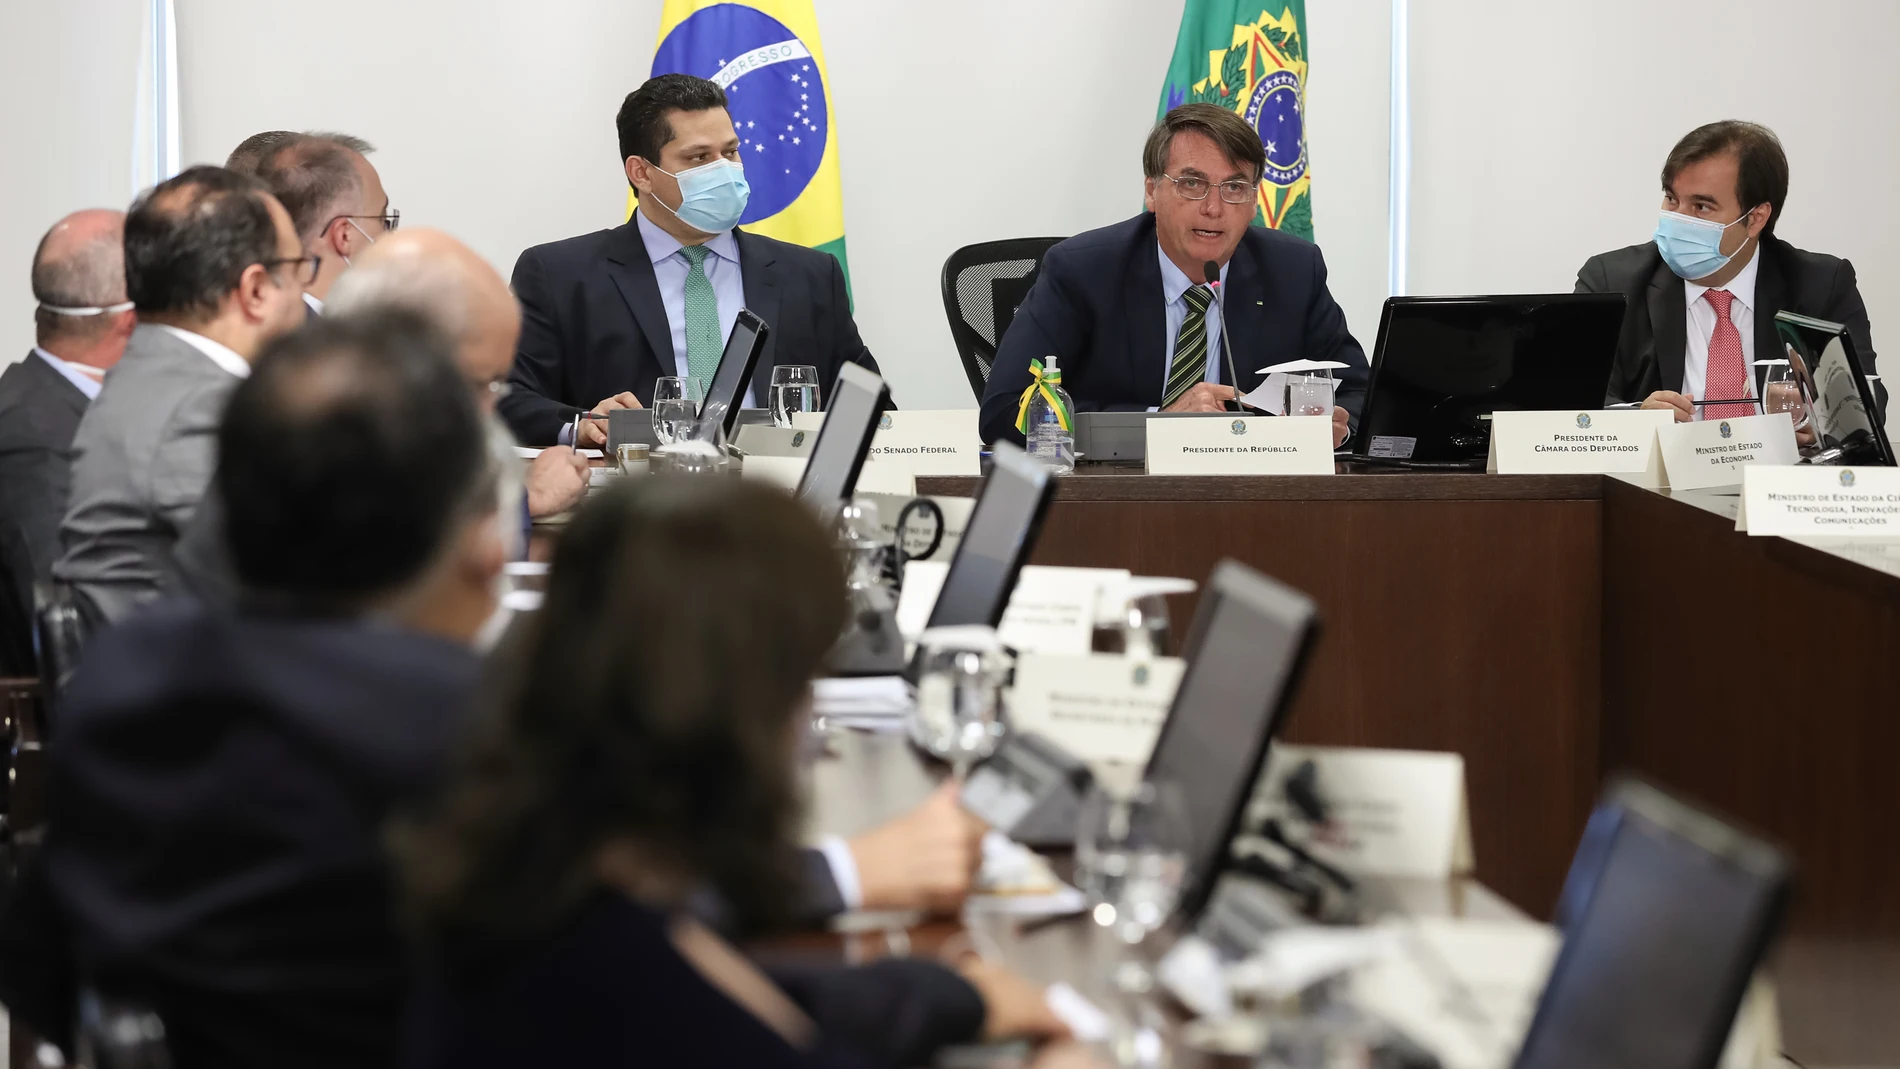 Brazilian President meets State Governors in Brasilia